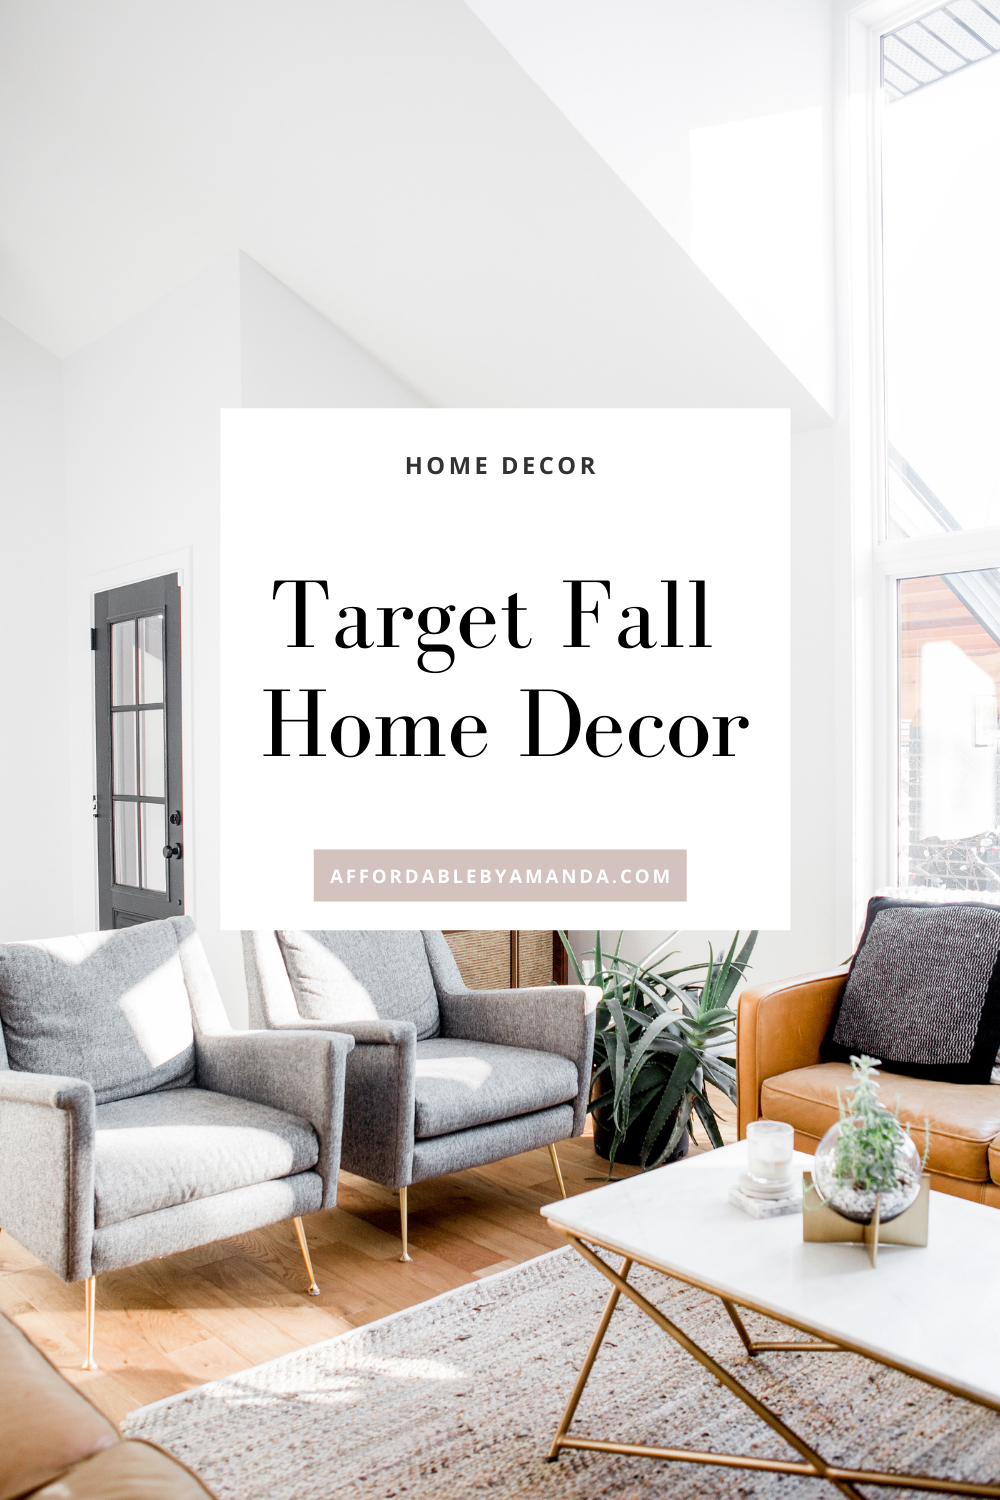 Target Fall Home Decor 2021 - Target Fall 2021 Sneak Peek - Fall Home Decor 2021 - Fall Decor from Target 2021.